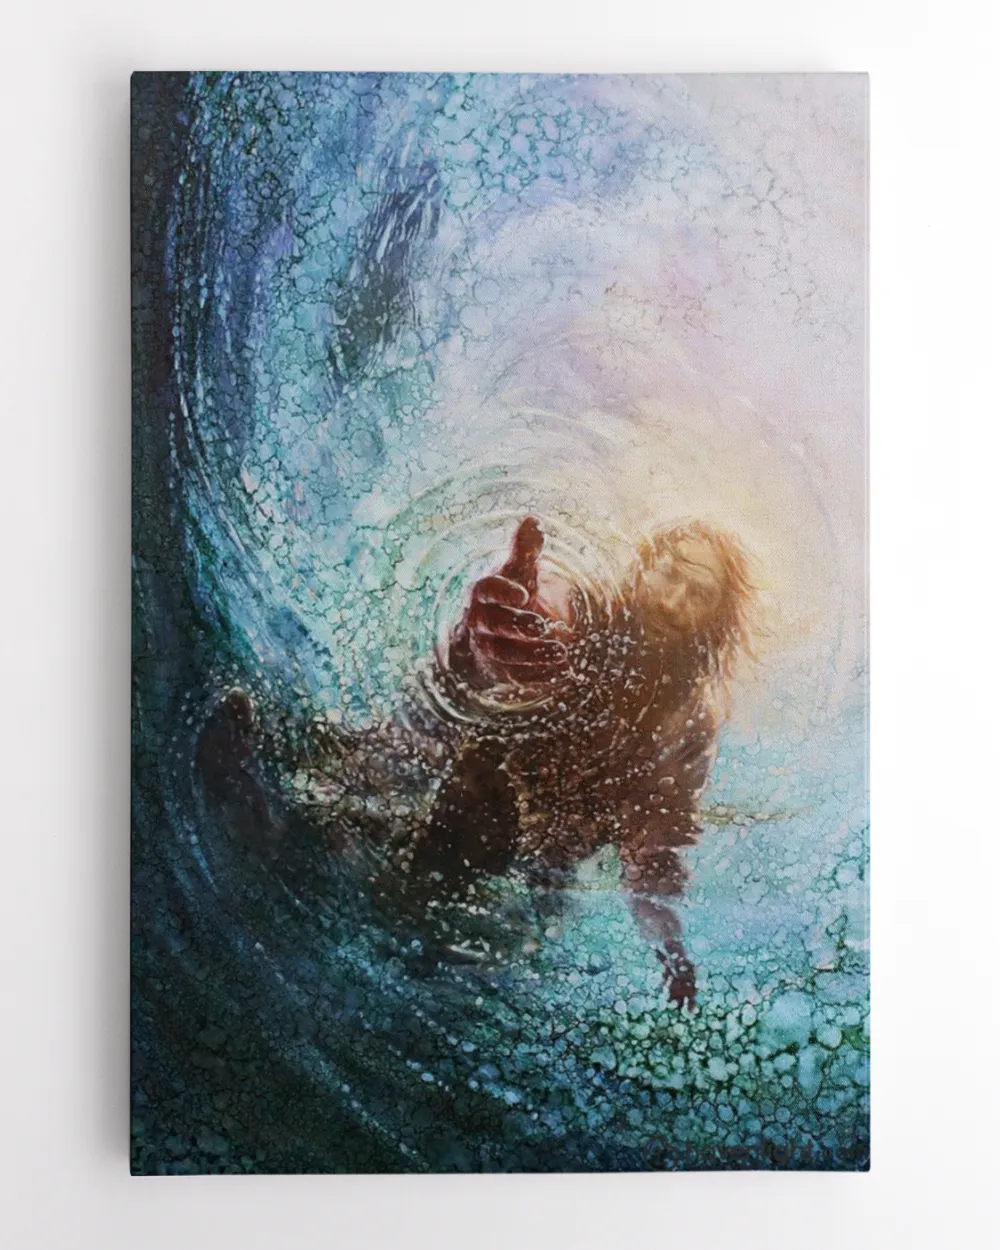 Jesus Christ Wall Art Hand of Gods Reaching Into Water